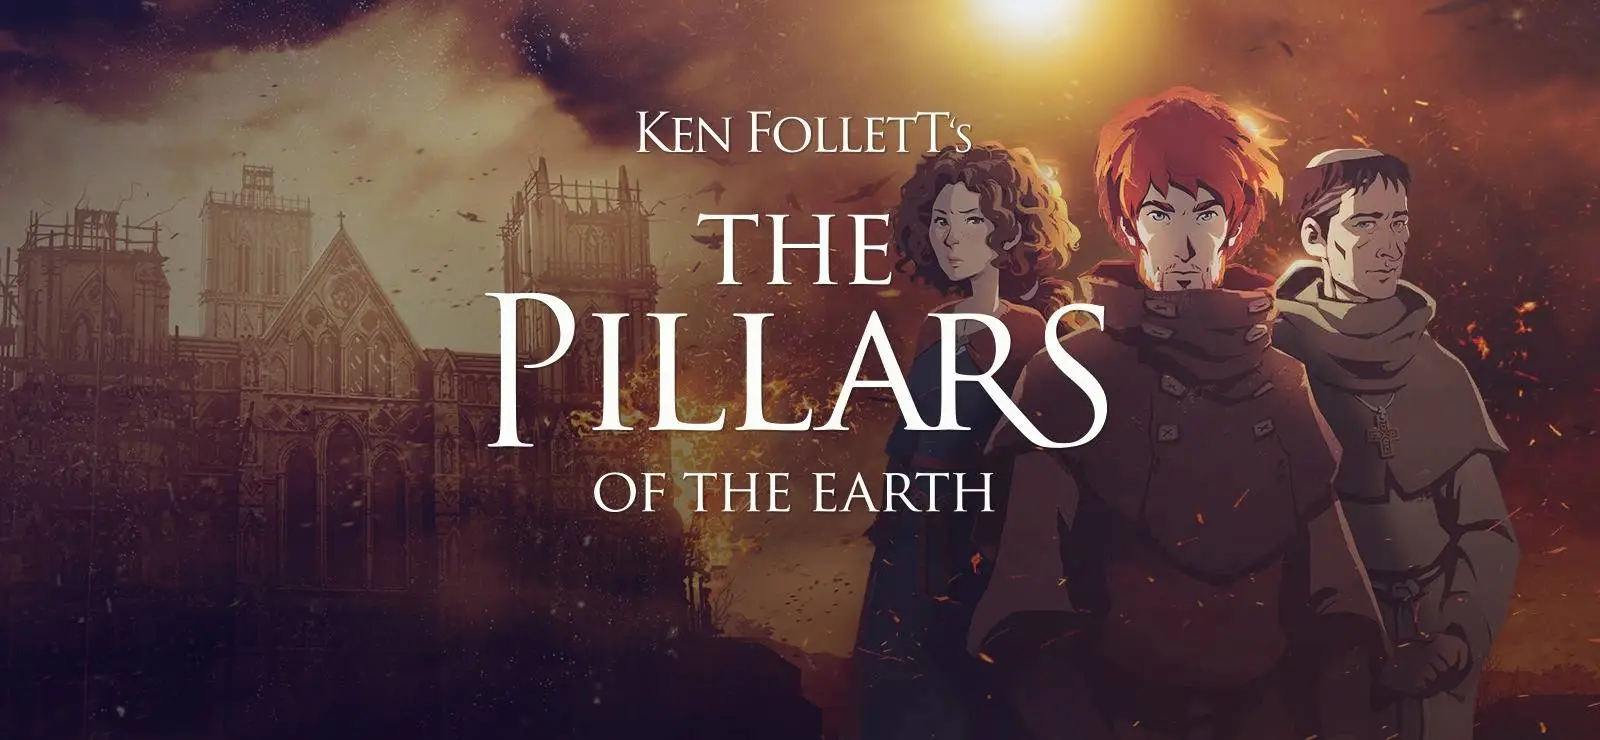 the pillars of the earth by ken follett